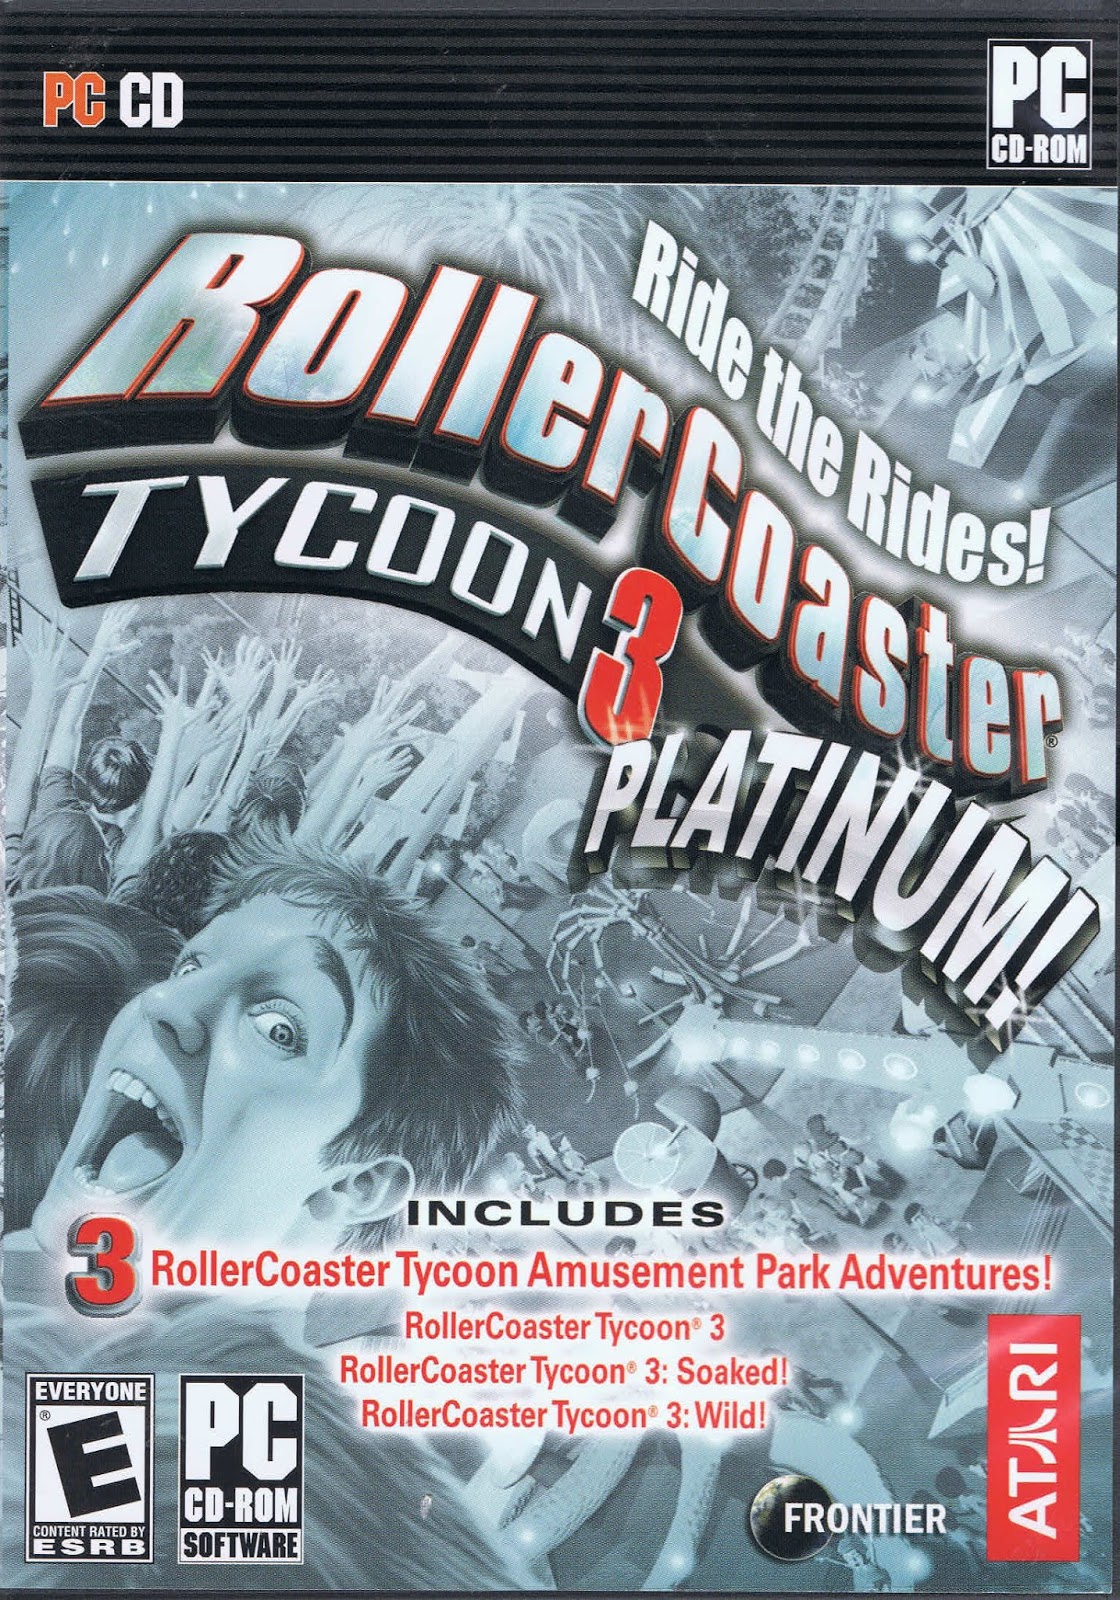 rollercoaster tycoon 3 platinum torrent download